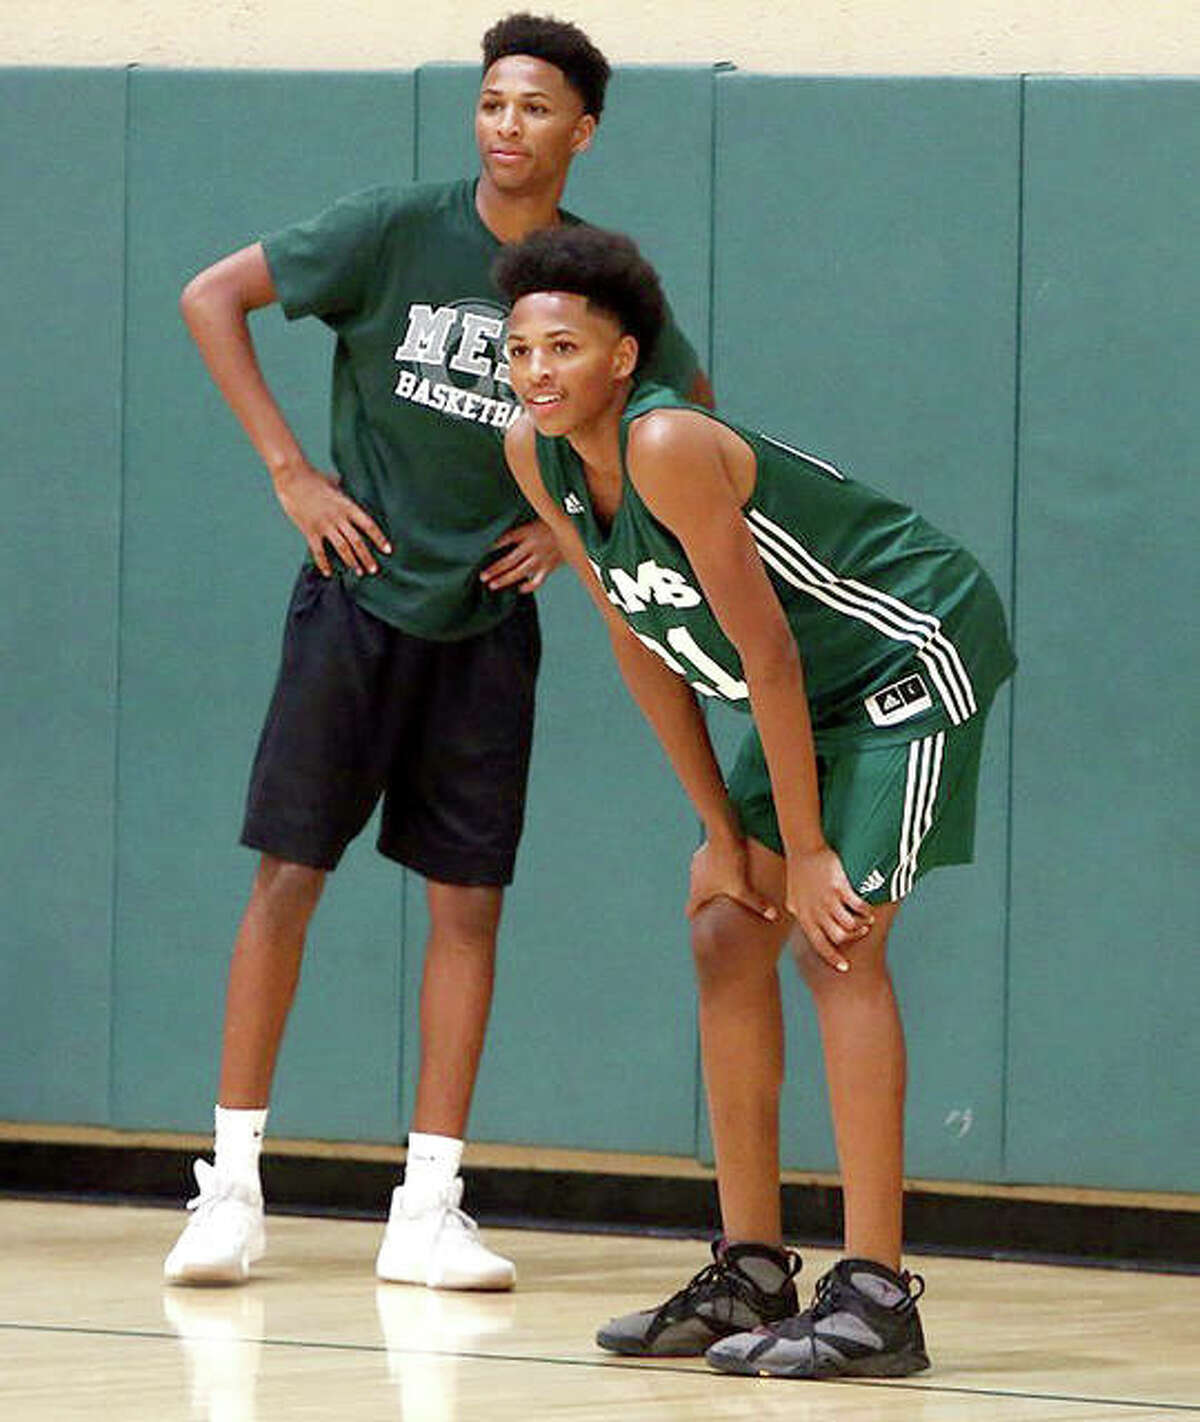 Twins Shamar (left) and Lamar Wright during a summer, 2017 basketball practice during their days at Murrieta Mesa High School in Murrieta, Calif.